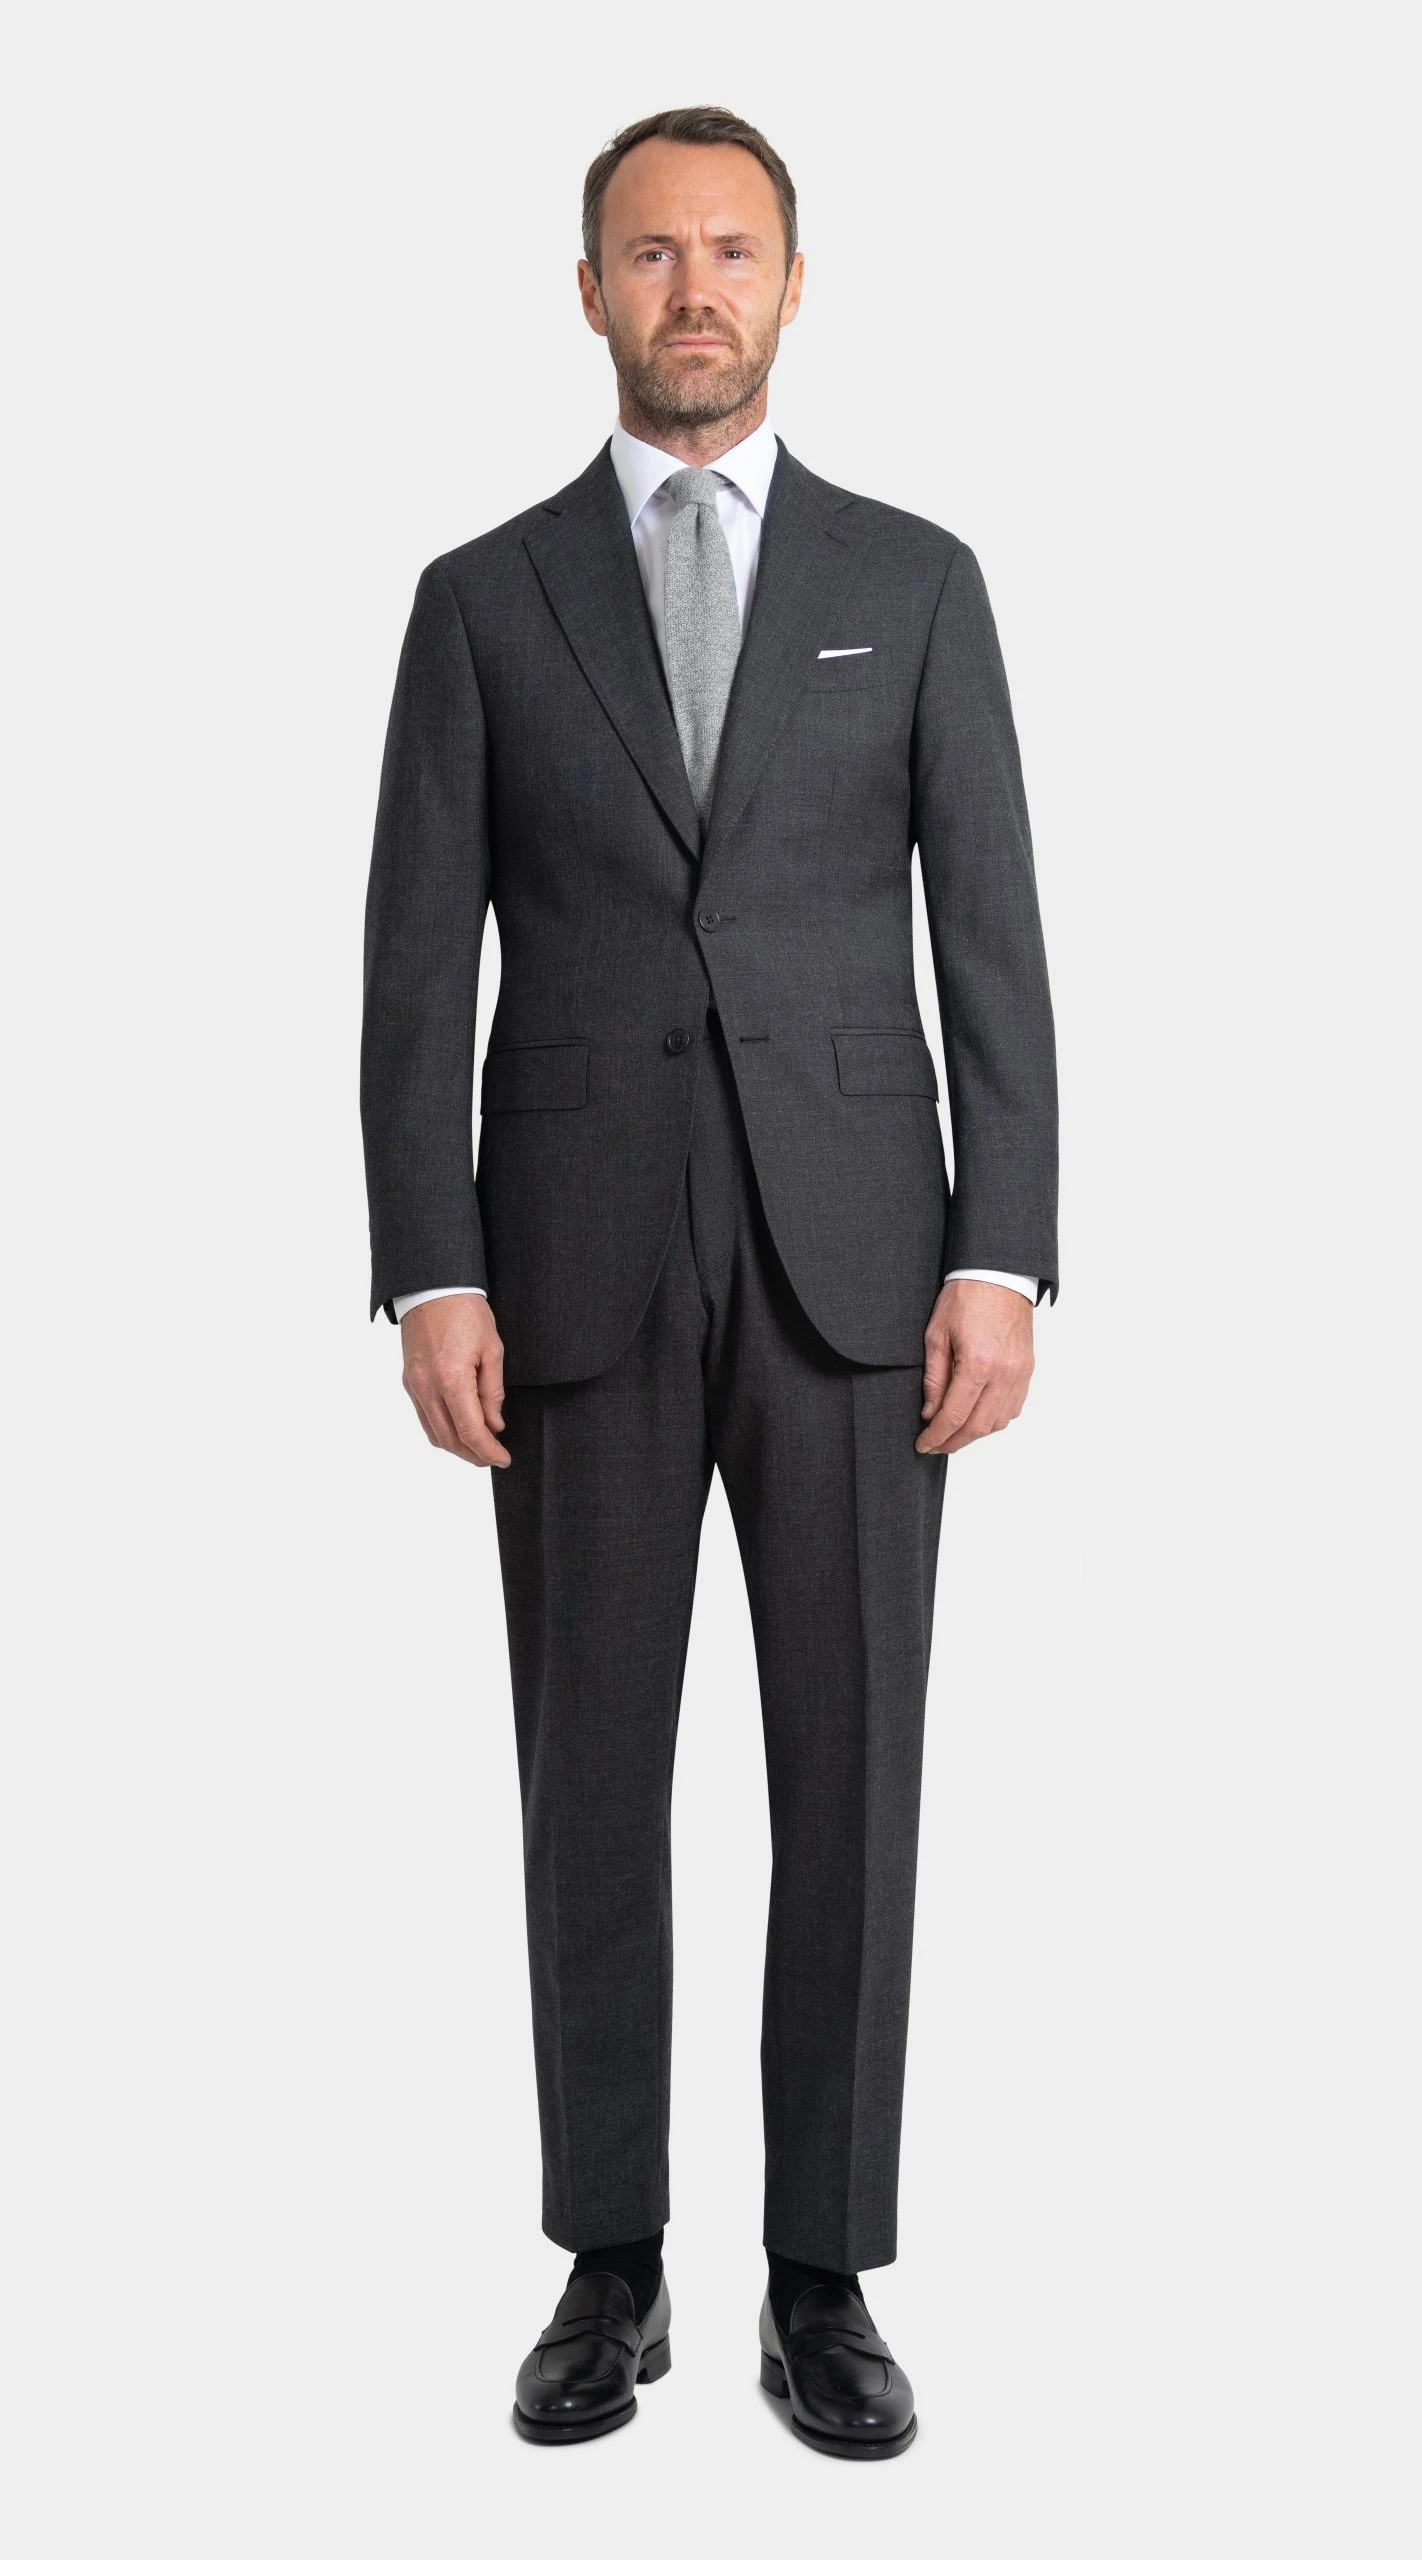 NEW dark grey suit in twistair fabric